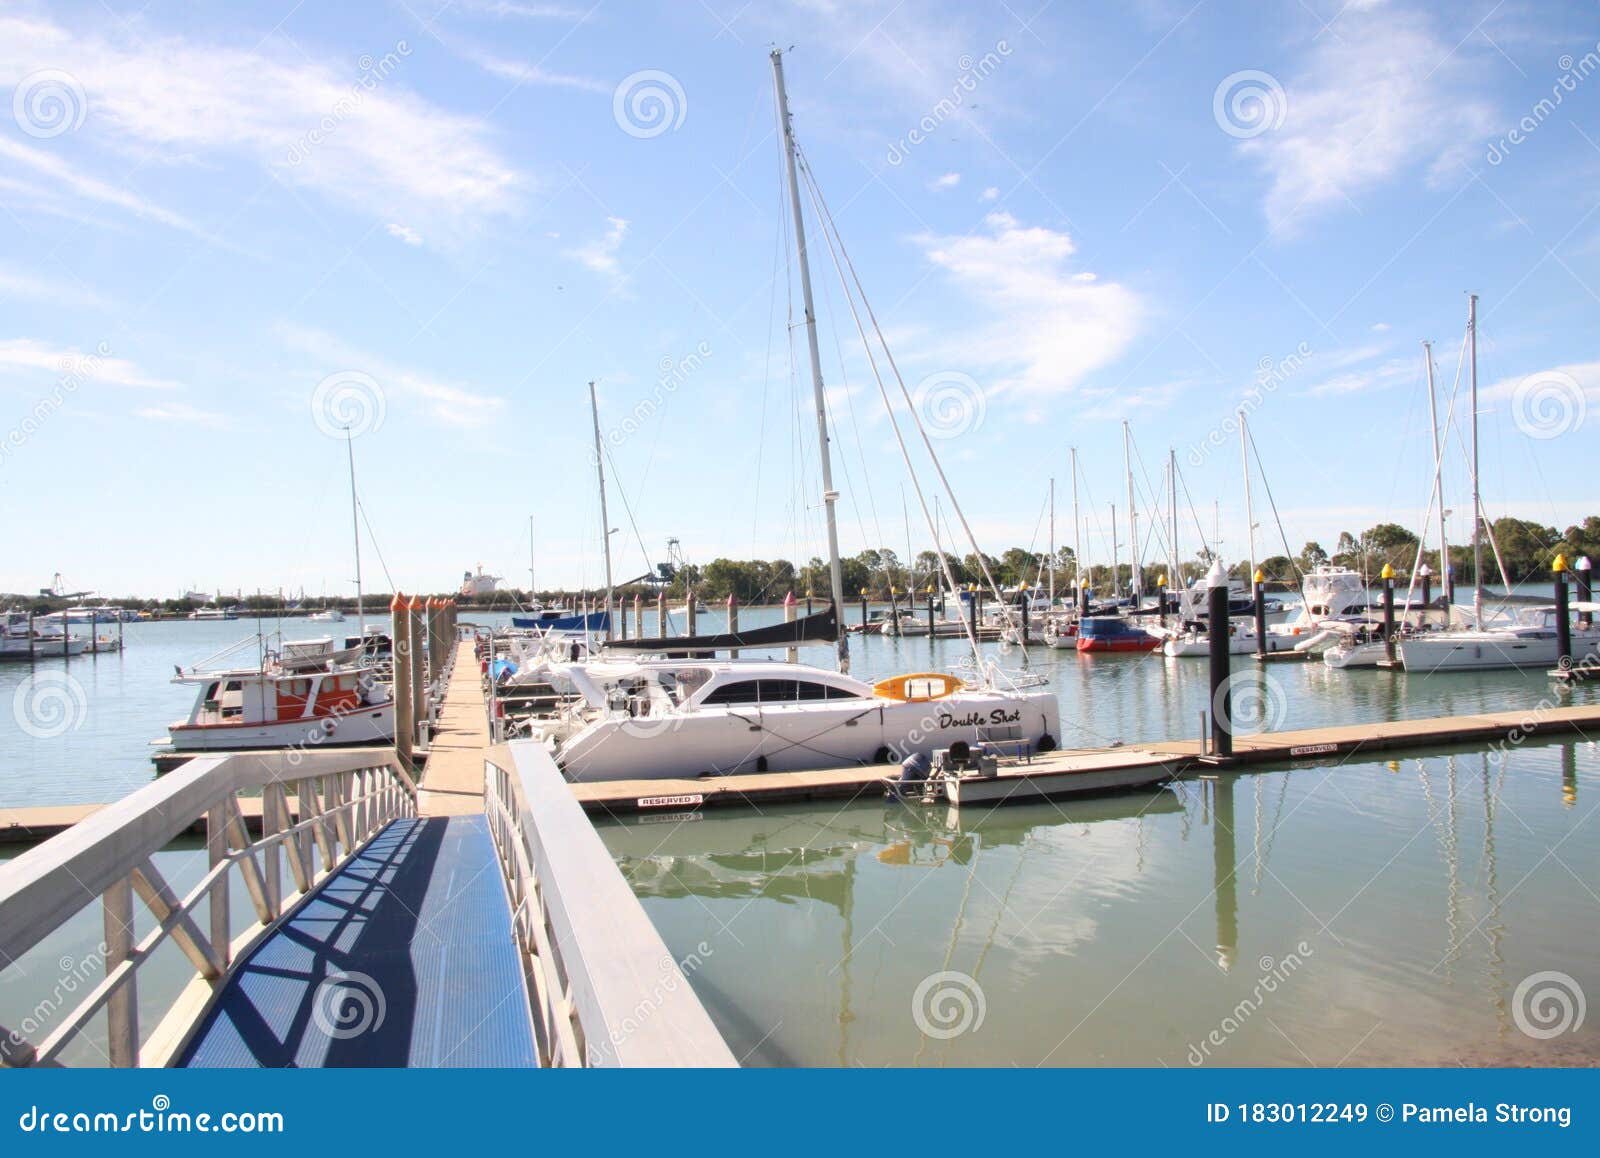 Boat Marina in Gladstone Queensland Stock Image - Image of queensland ...